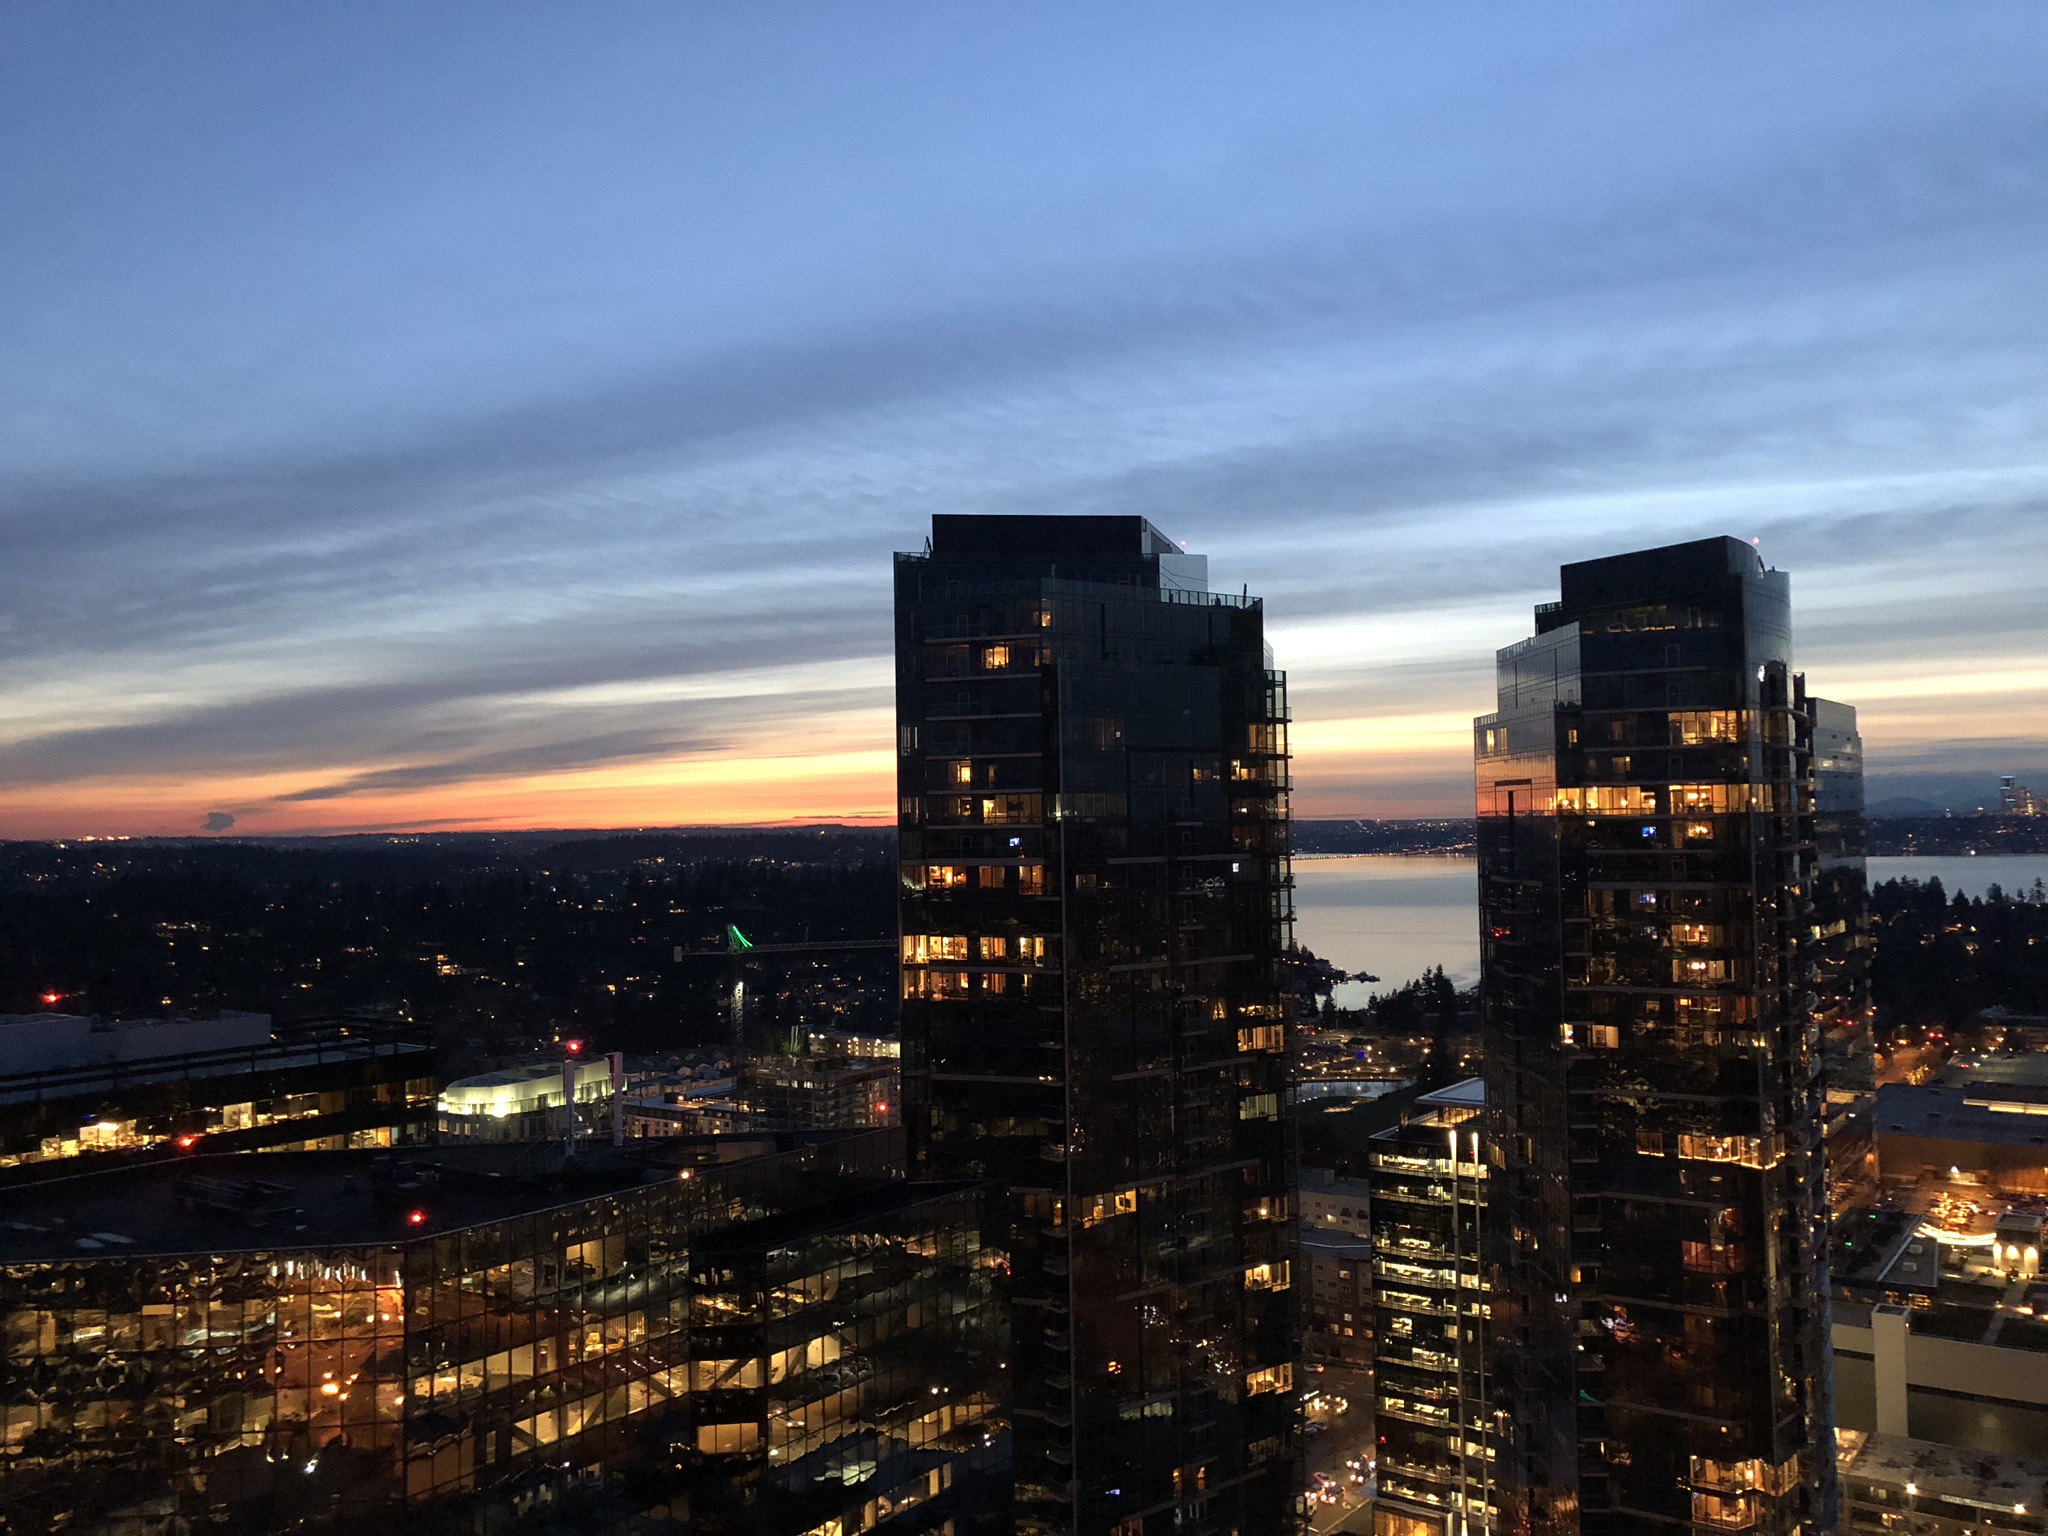 Sunset over Bellevue